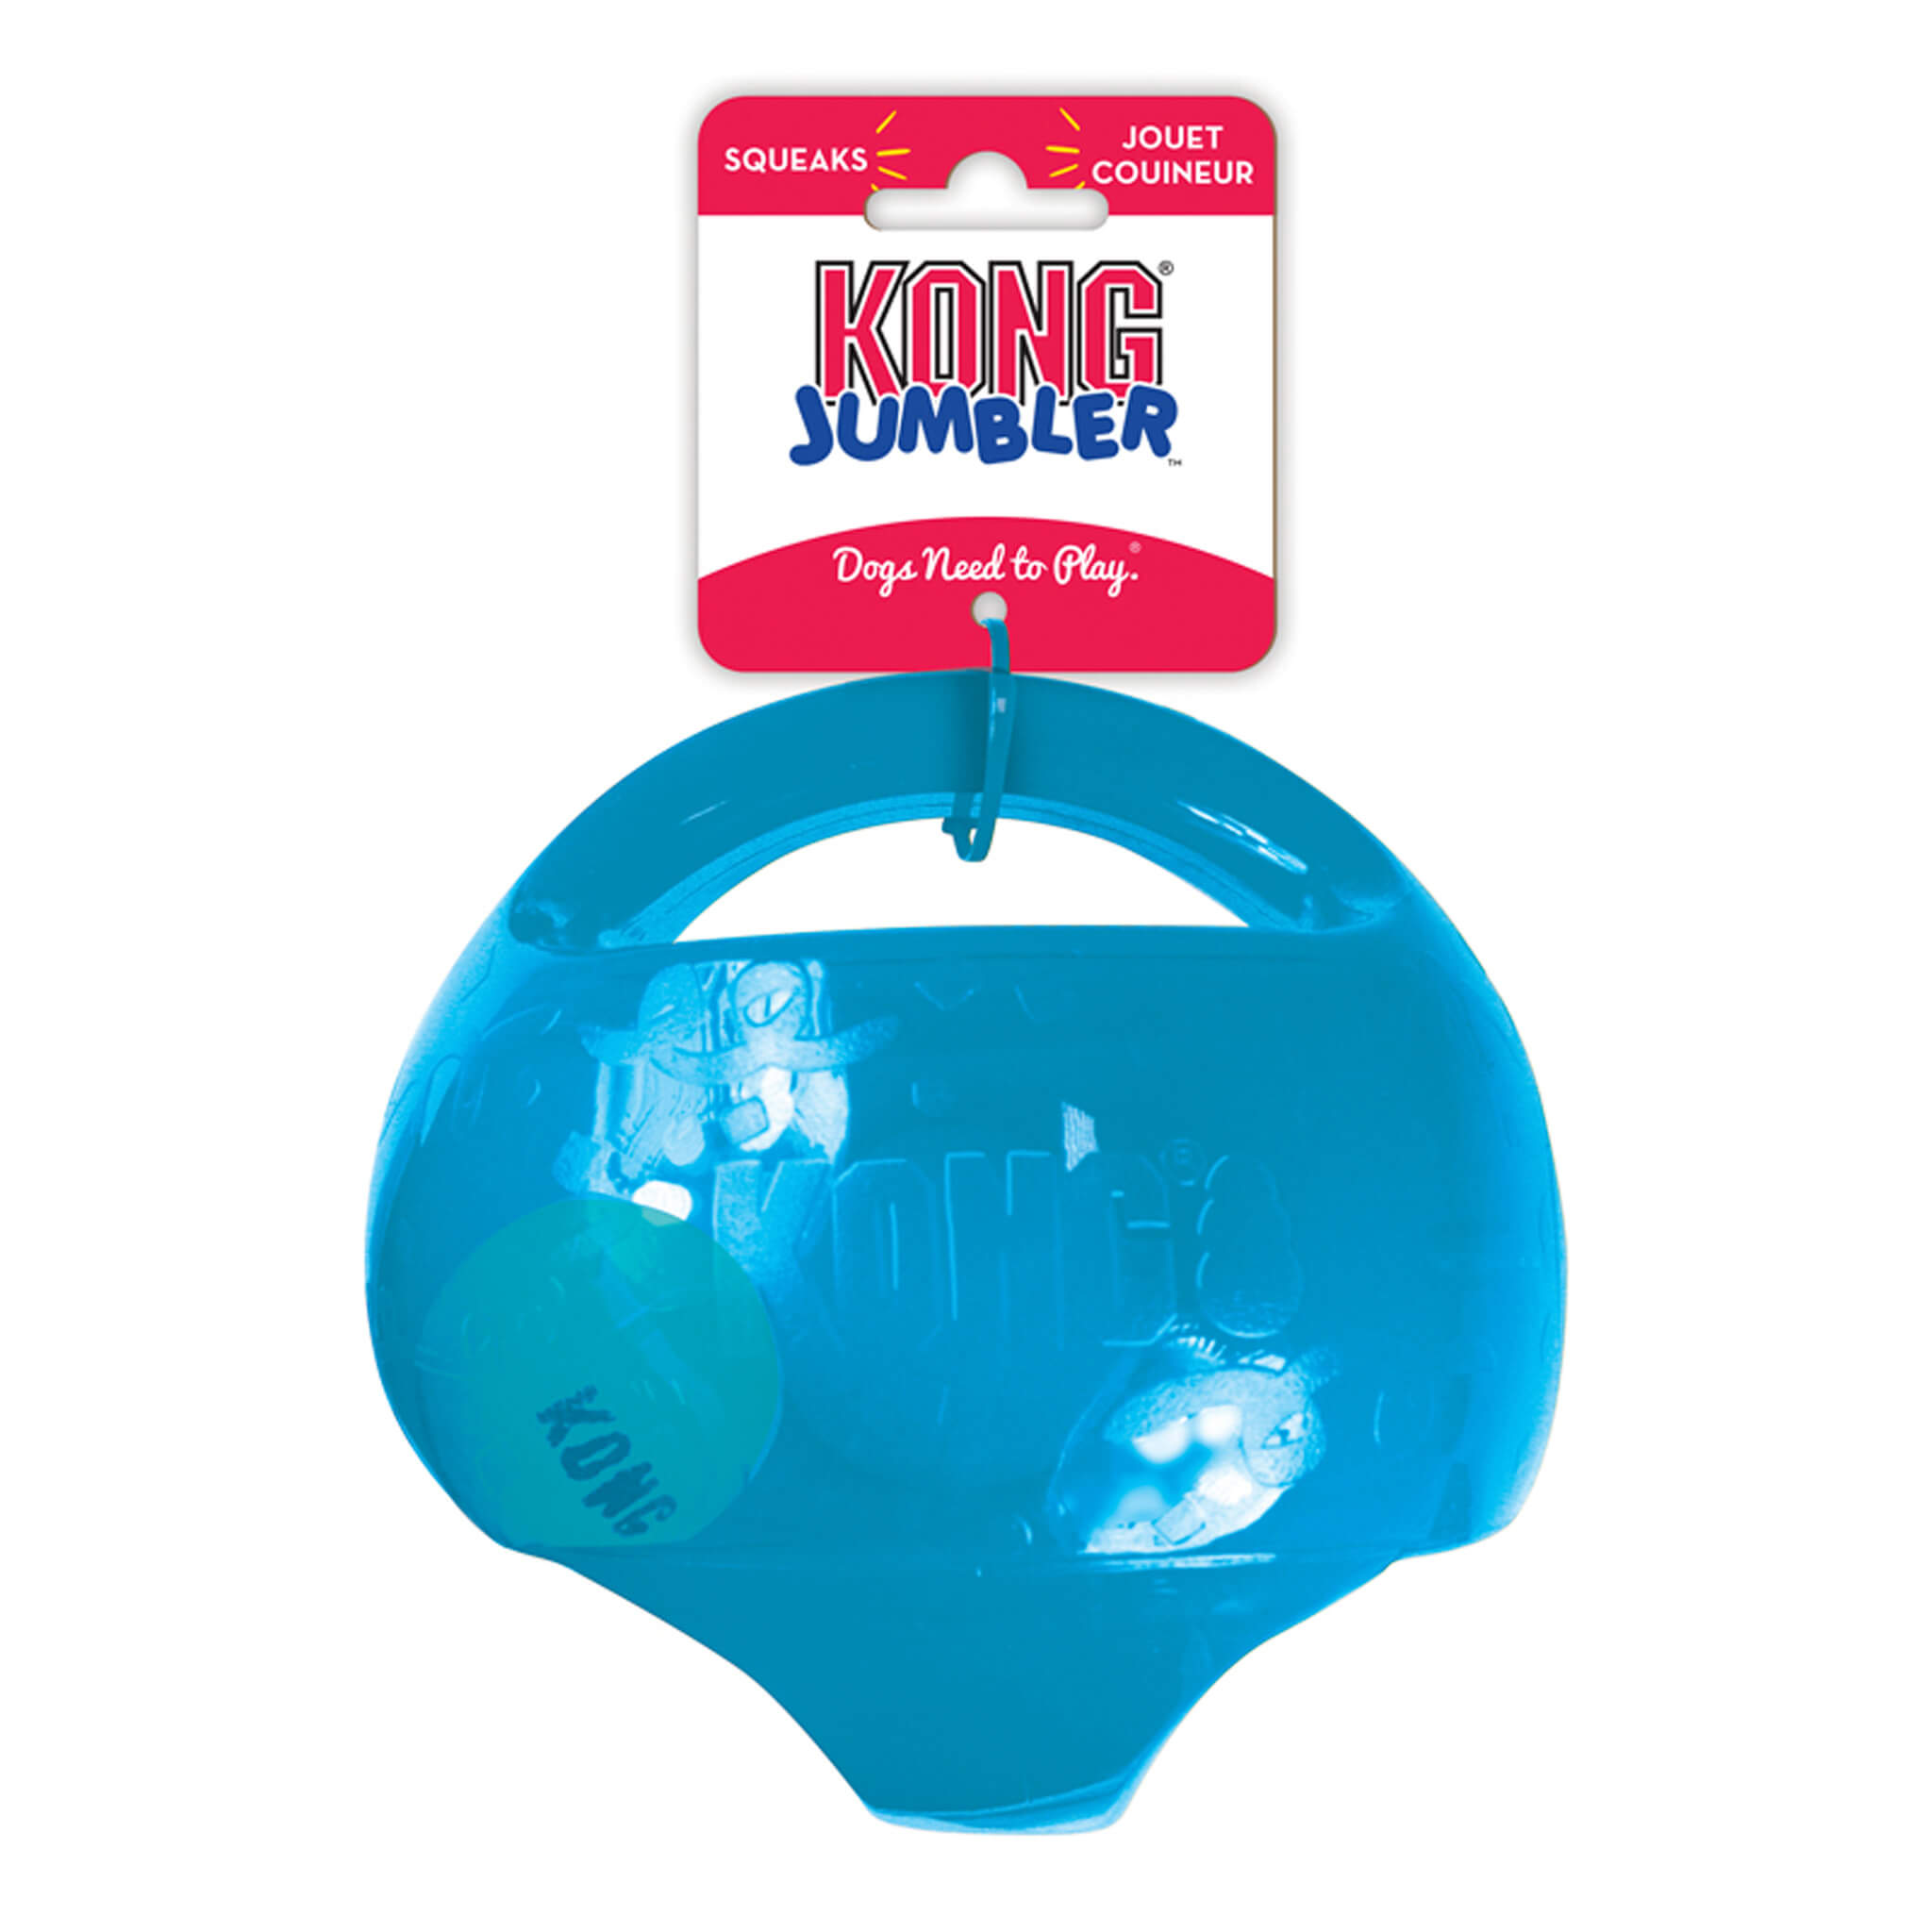 Kong dog toy - jumbler ball assorted